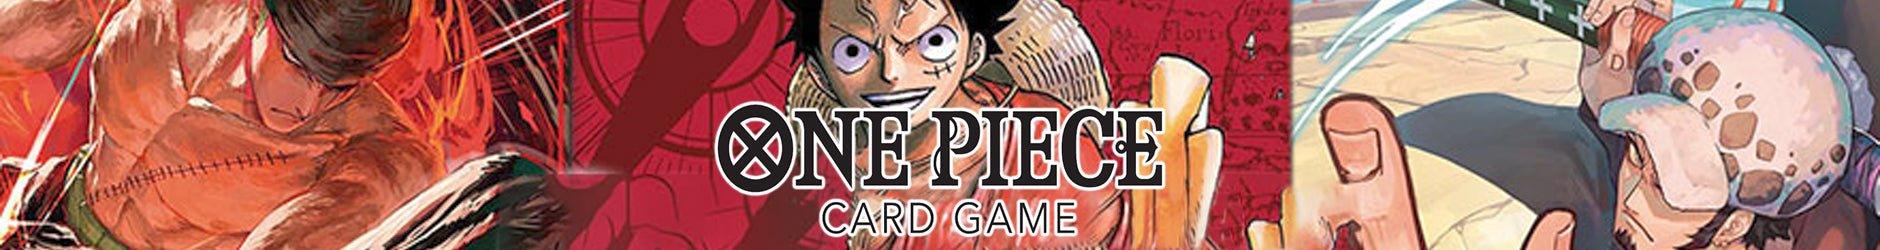 One Piece Sales - Romulus Games